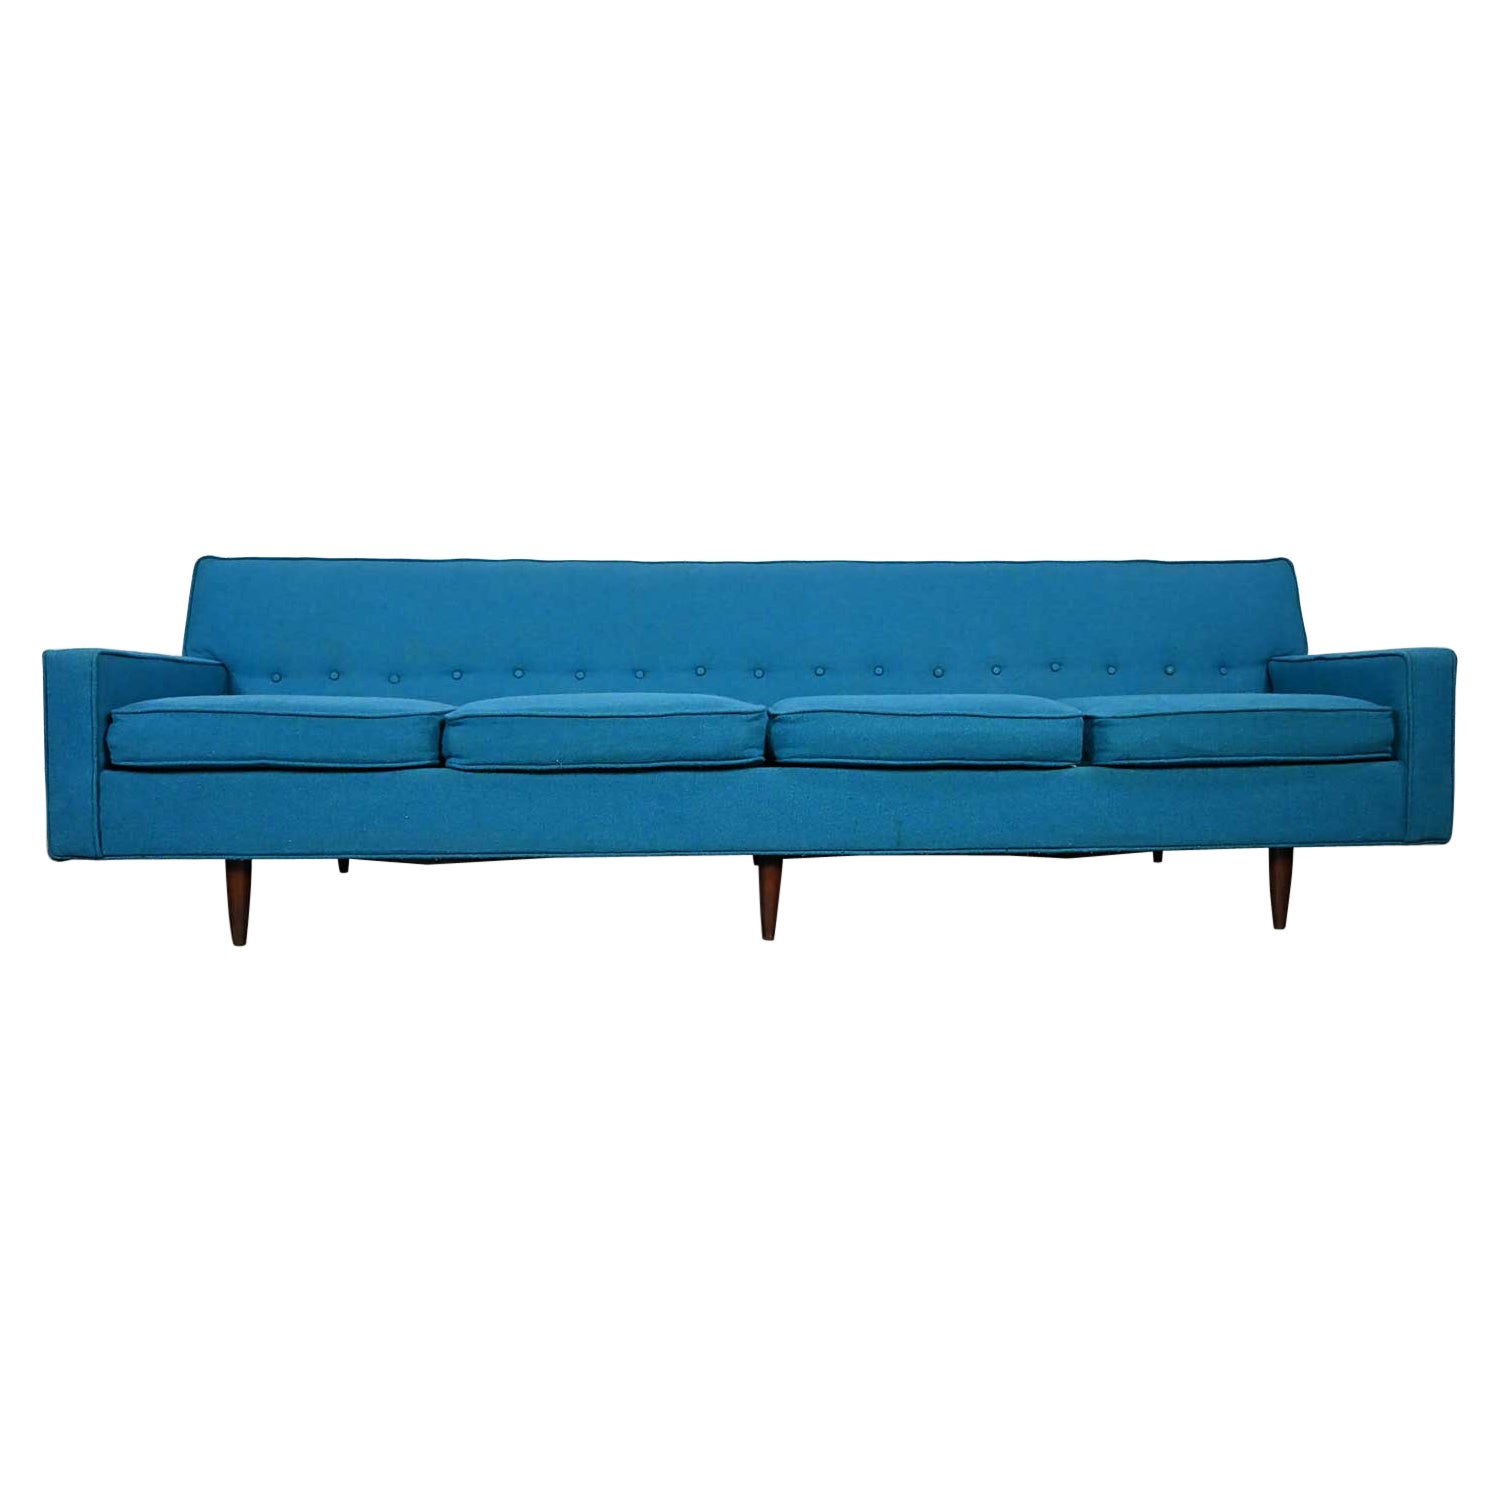 Mid-Century Modern Turquoise Lawson 4 Cushion Sofa Attr Milo Baughman James Inc. For Sale